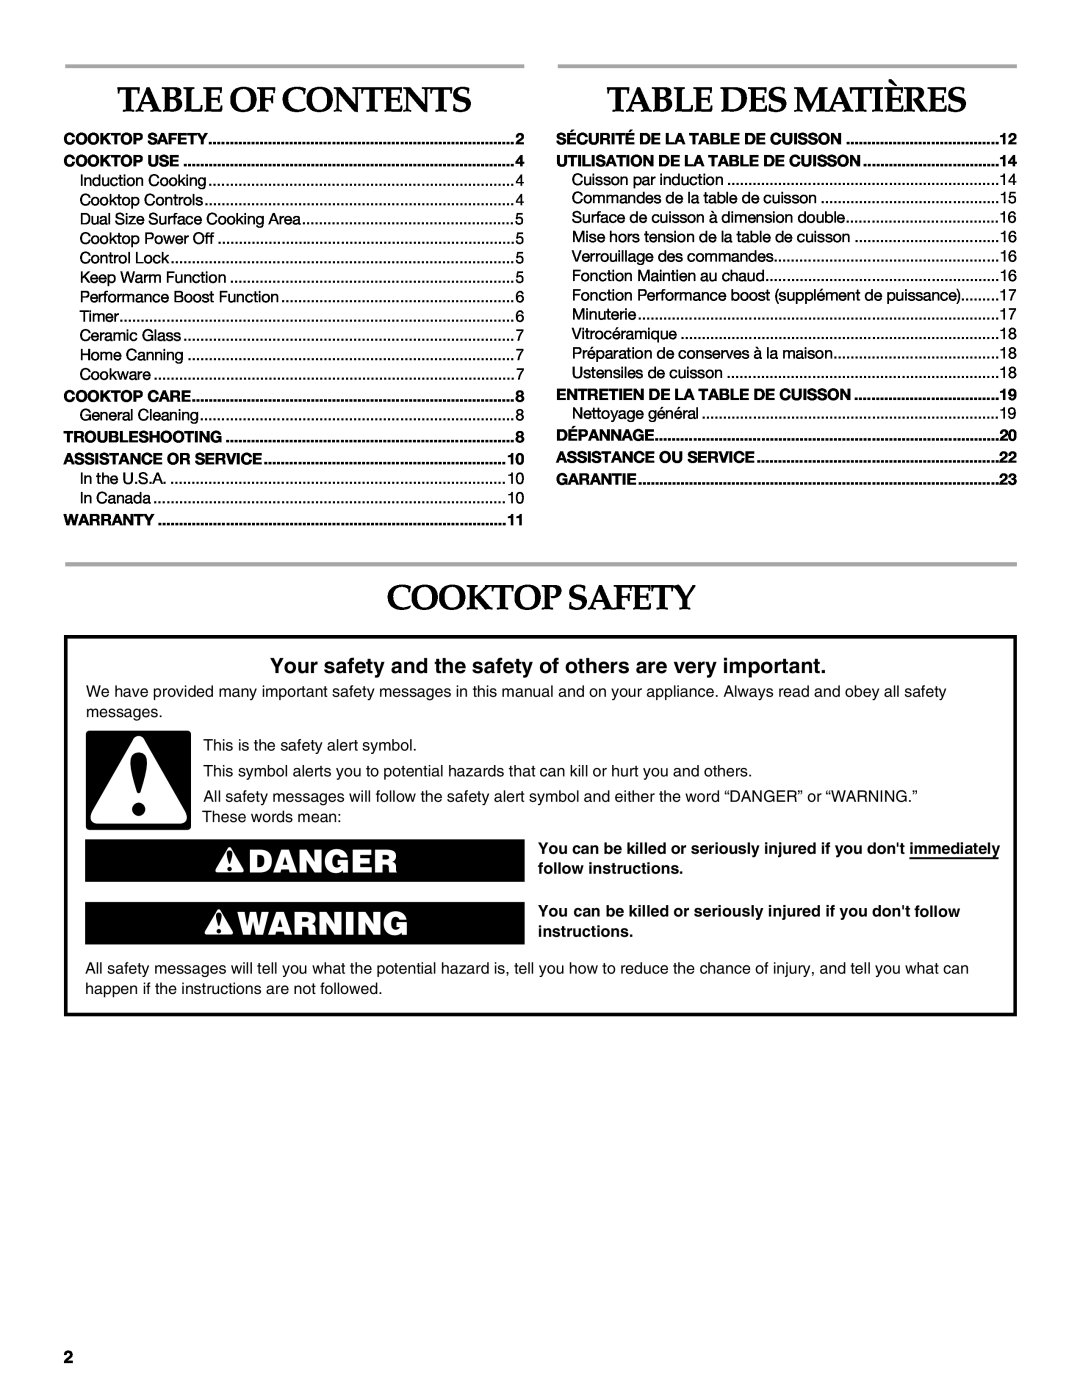 KitchenAid KICU508S, KICU568S manual Table Of Contents, Table Des Matières, Cooktop Safety, Danger 